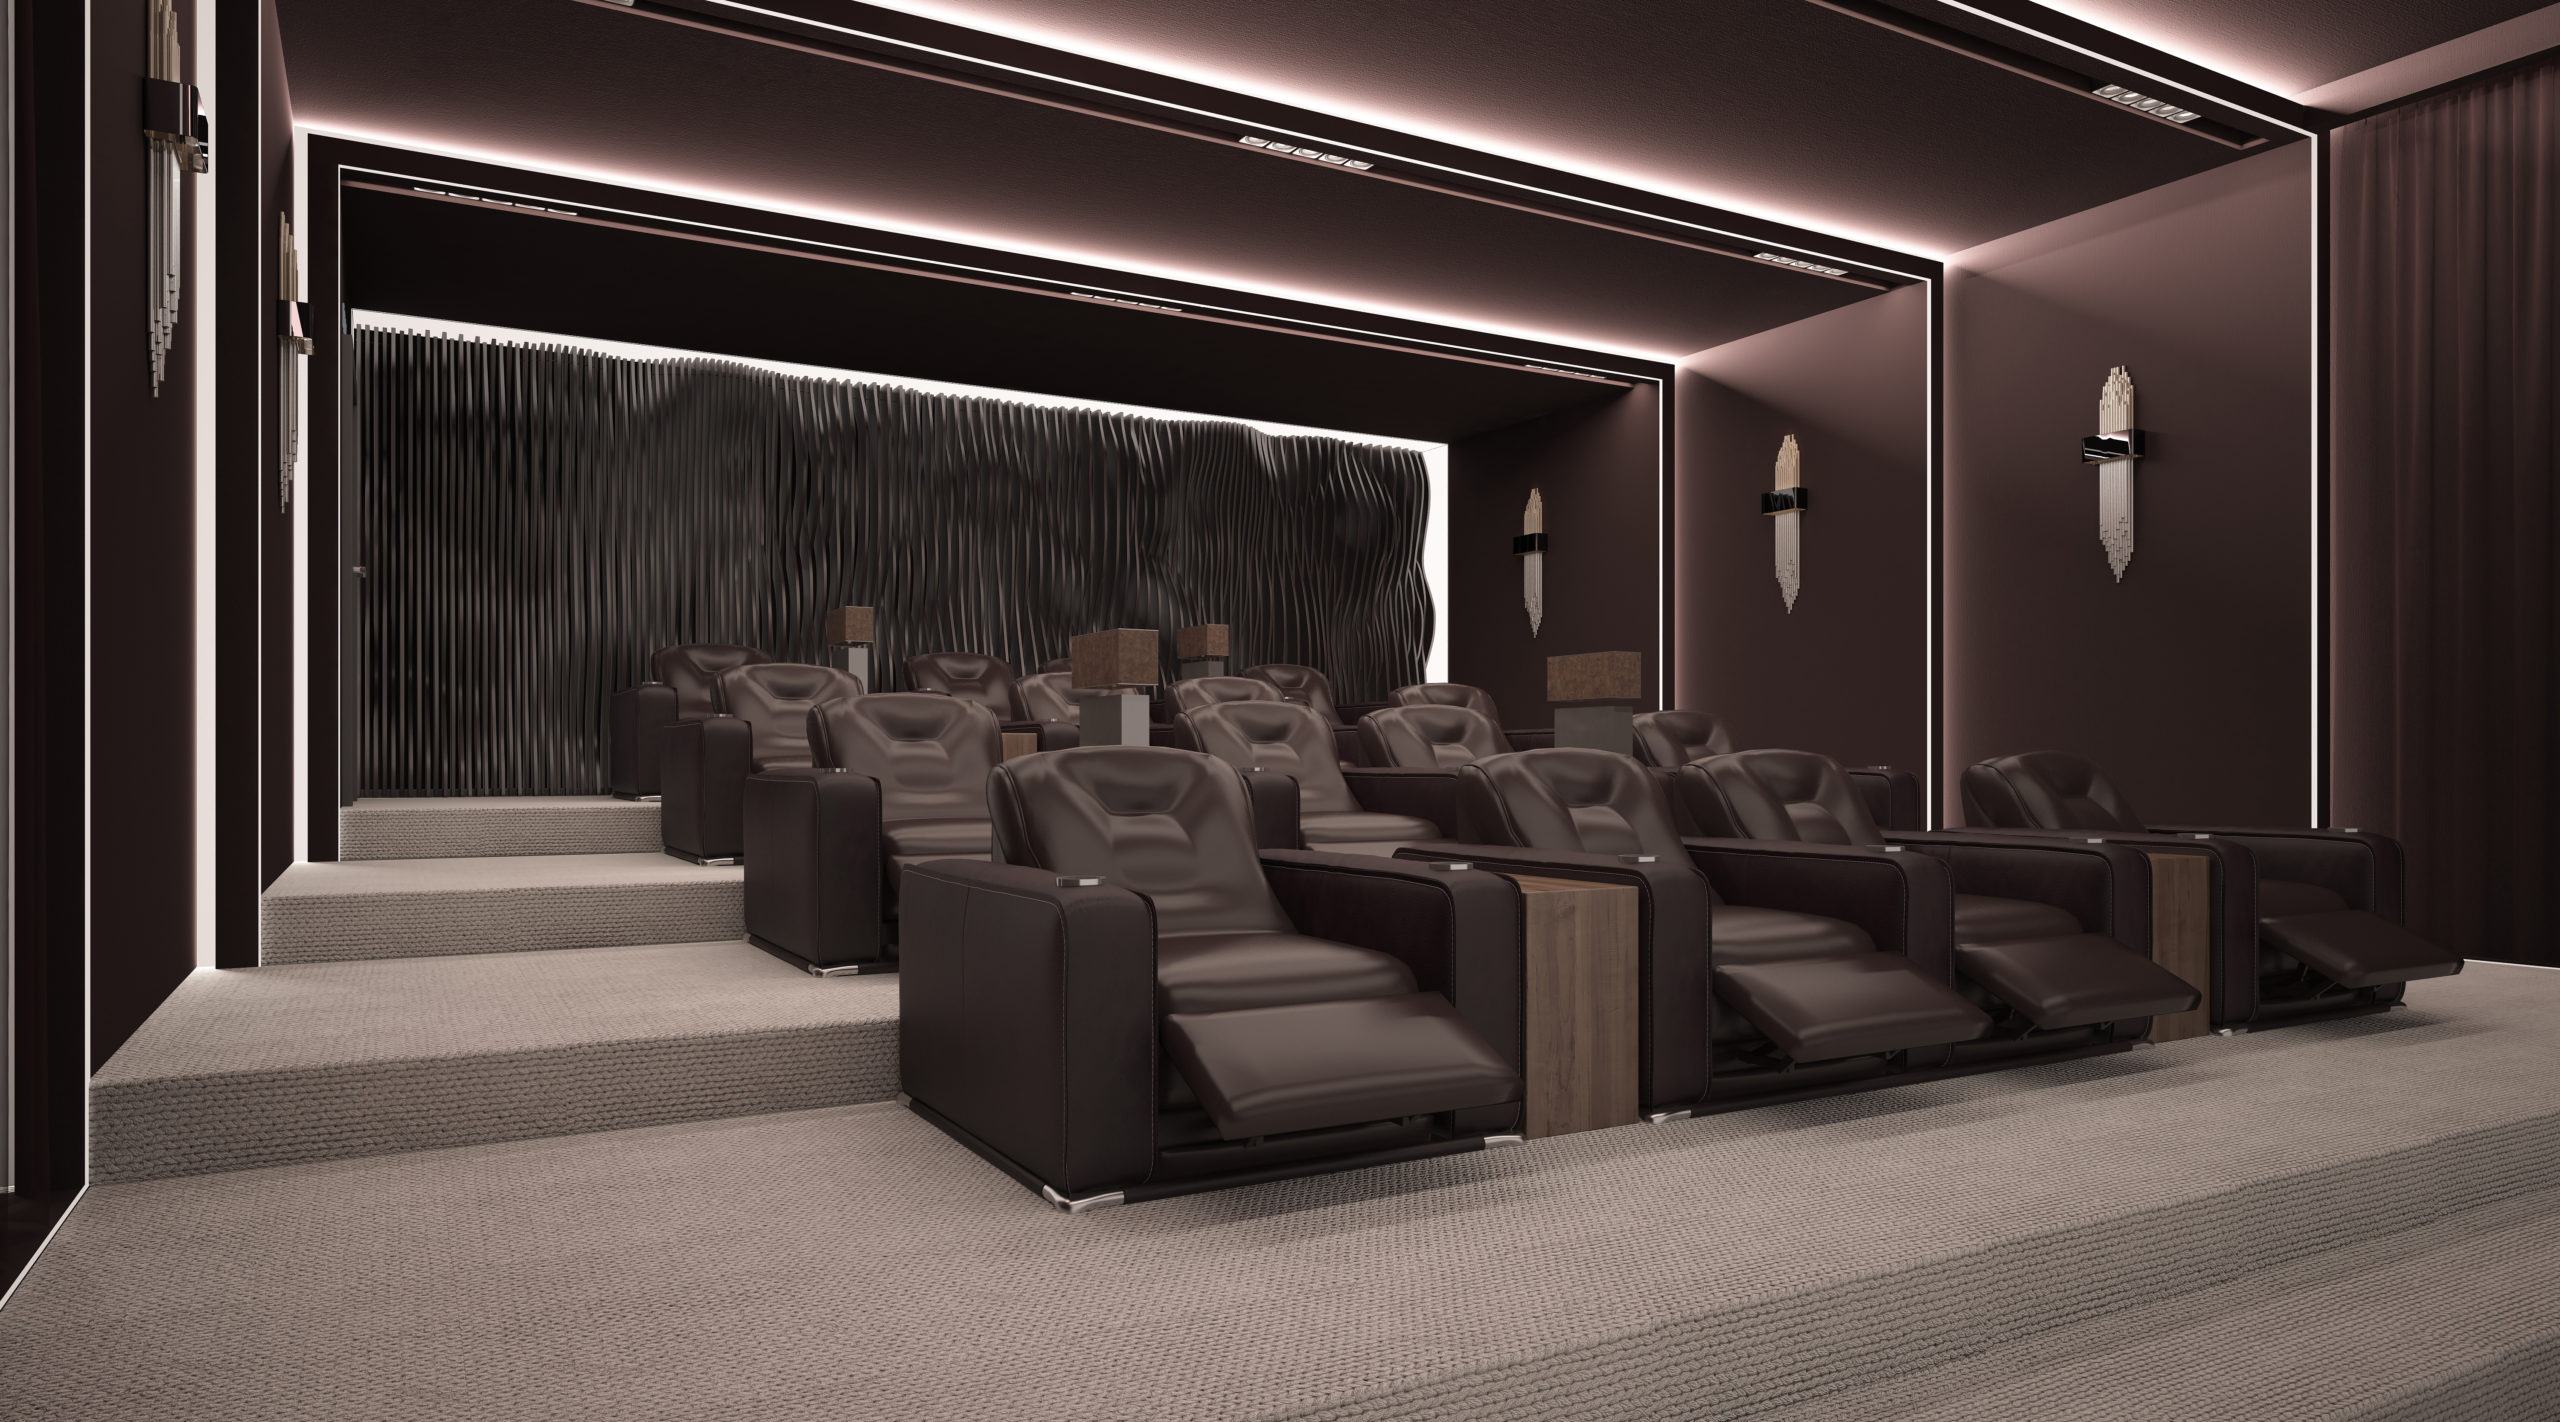 Cinema,Room,With,Comfortable,Seats